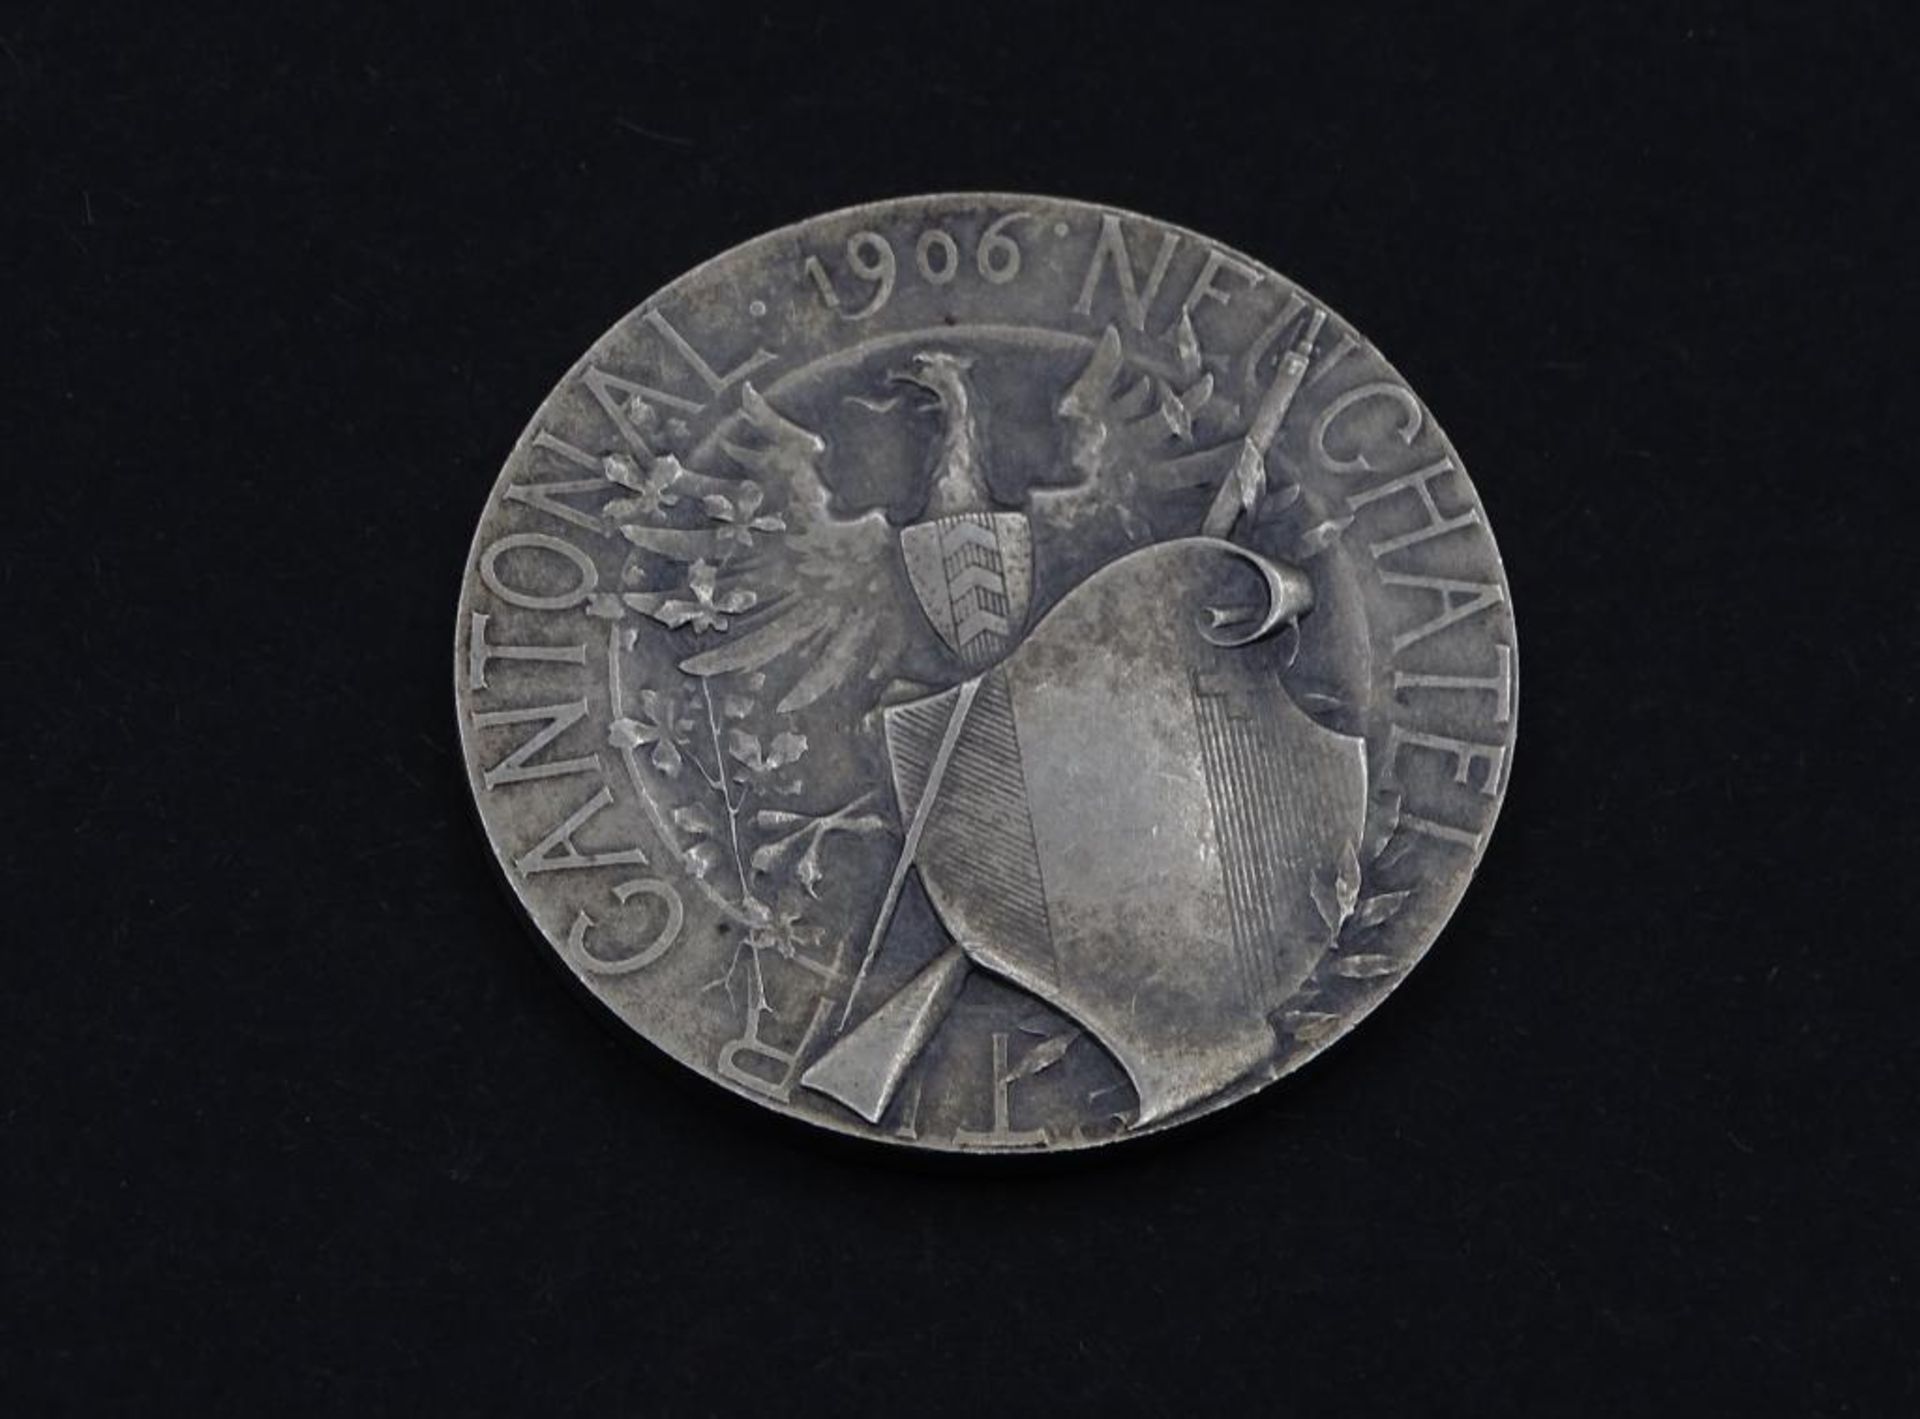 Silber Medaille 1906 Cantonal Neuchatel , 15,3gr., d-3,3cm- - -22.61 % buyer's premium on the hammer - Bild 2 aus 2